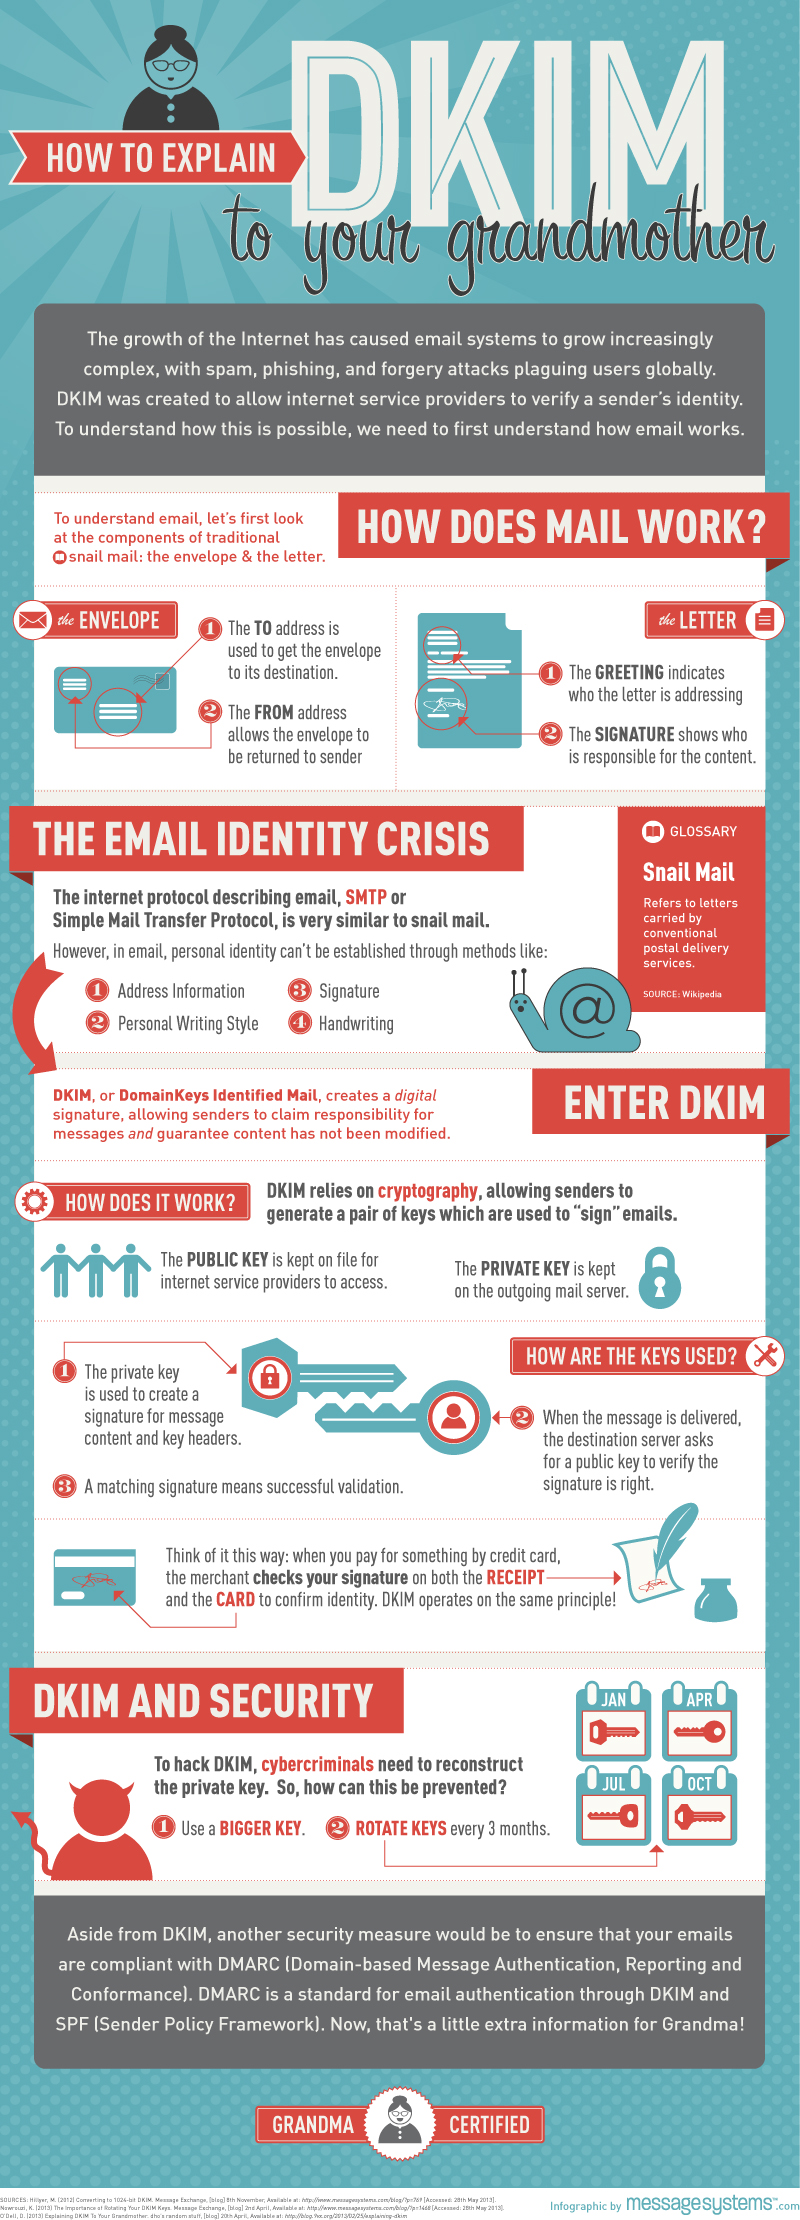 What is DKIM (Domainkeys Identified Mail)